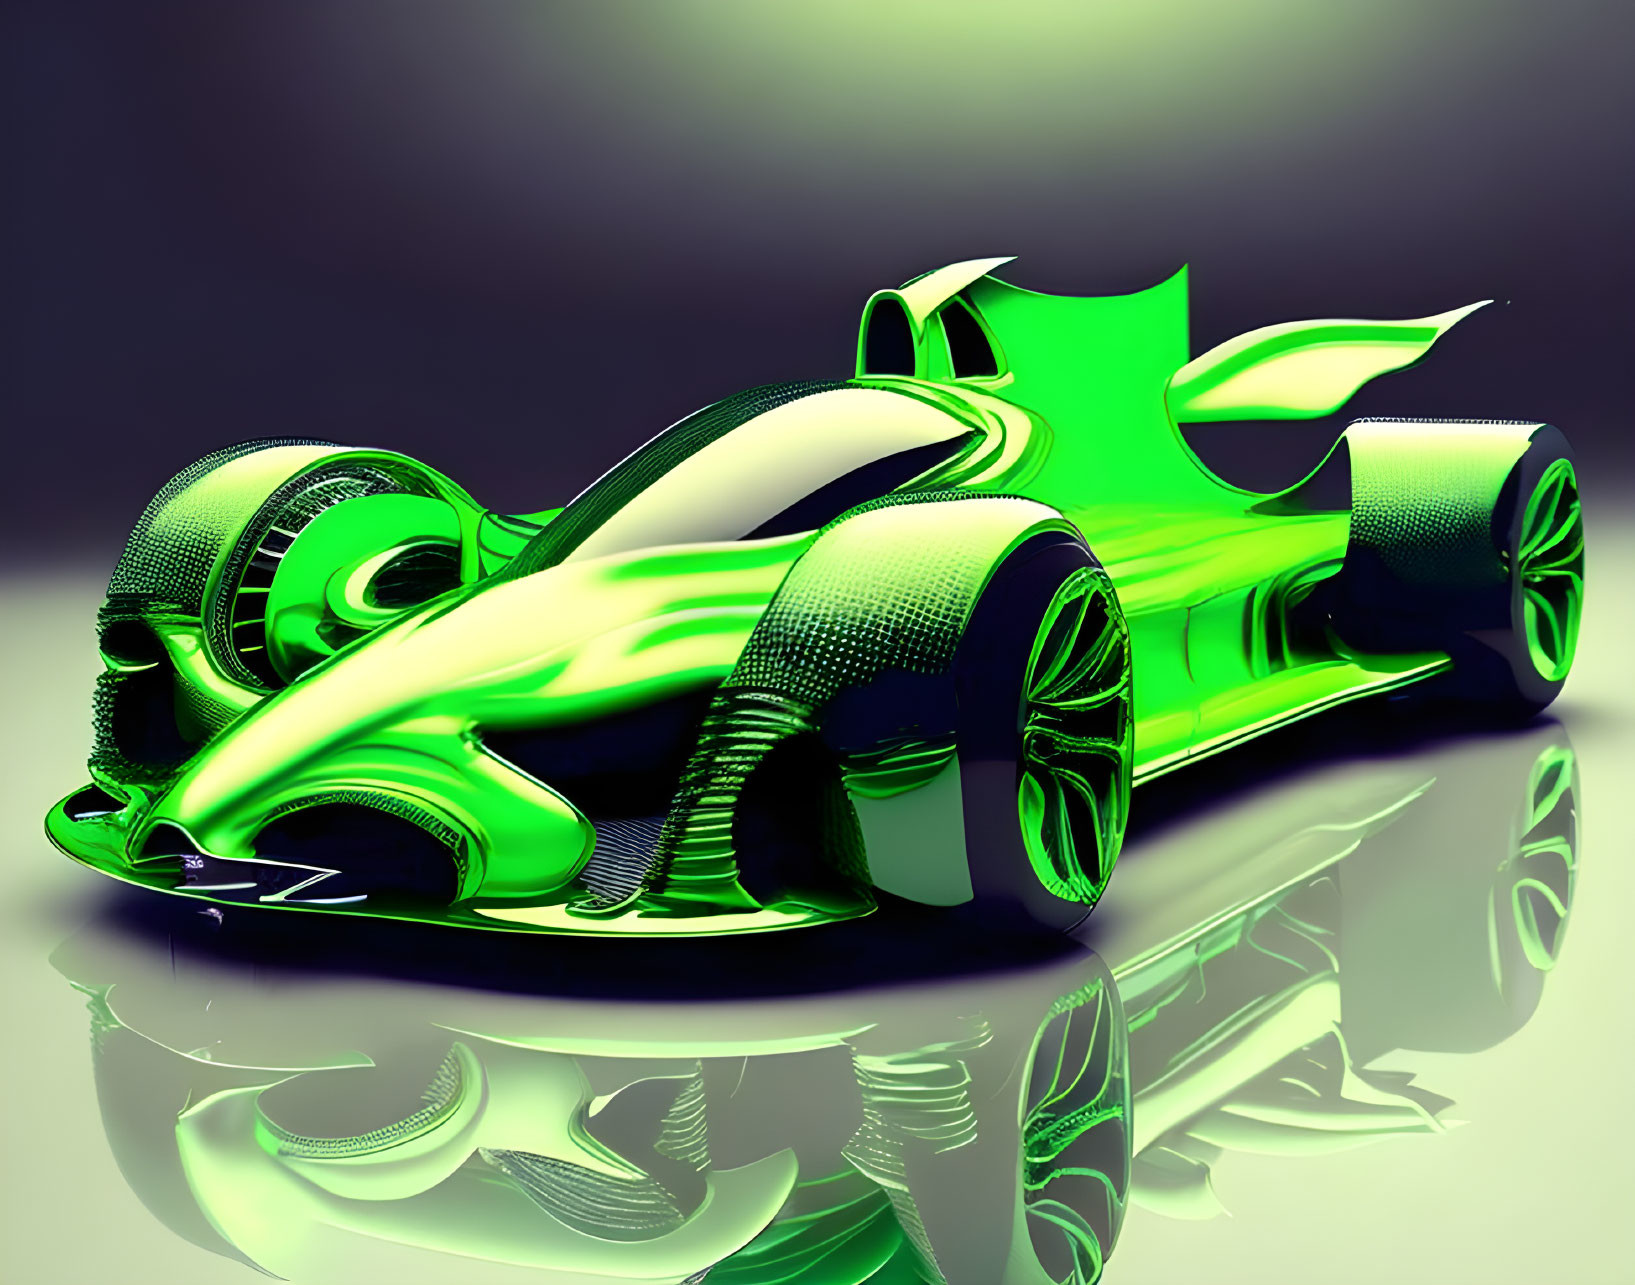 Futuristic Green Race Car on Grey Background